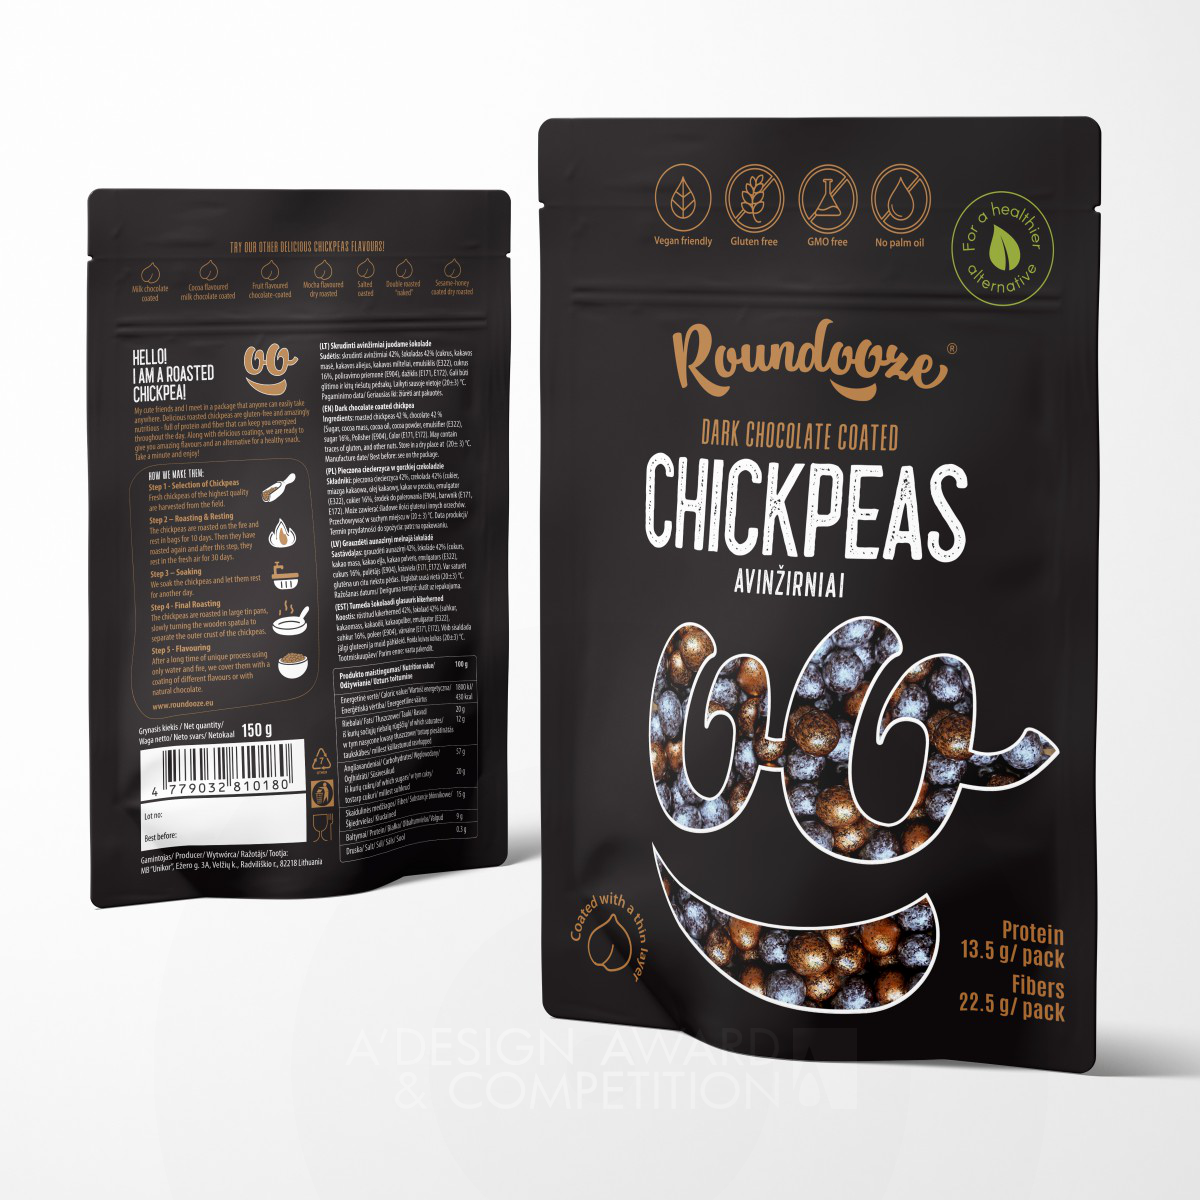 Roundooze Chickpea Snack Packaging by Salvita Bingelyte